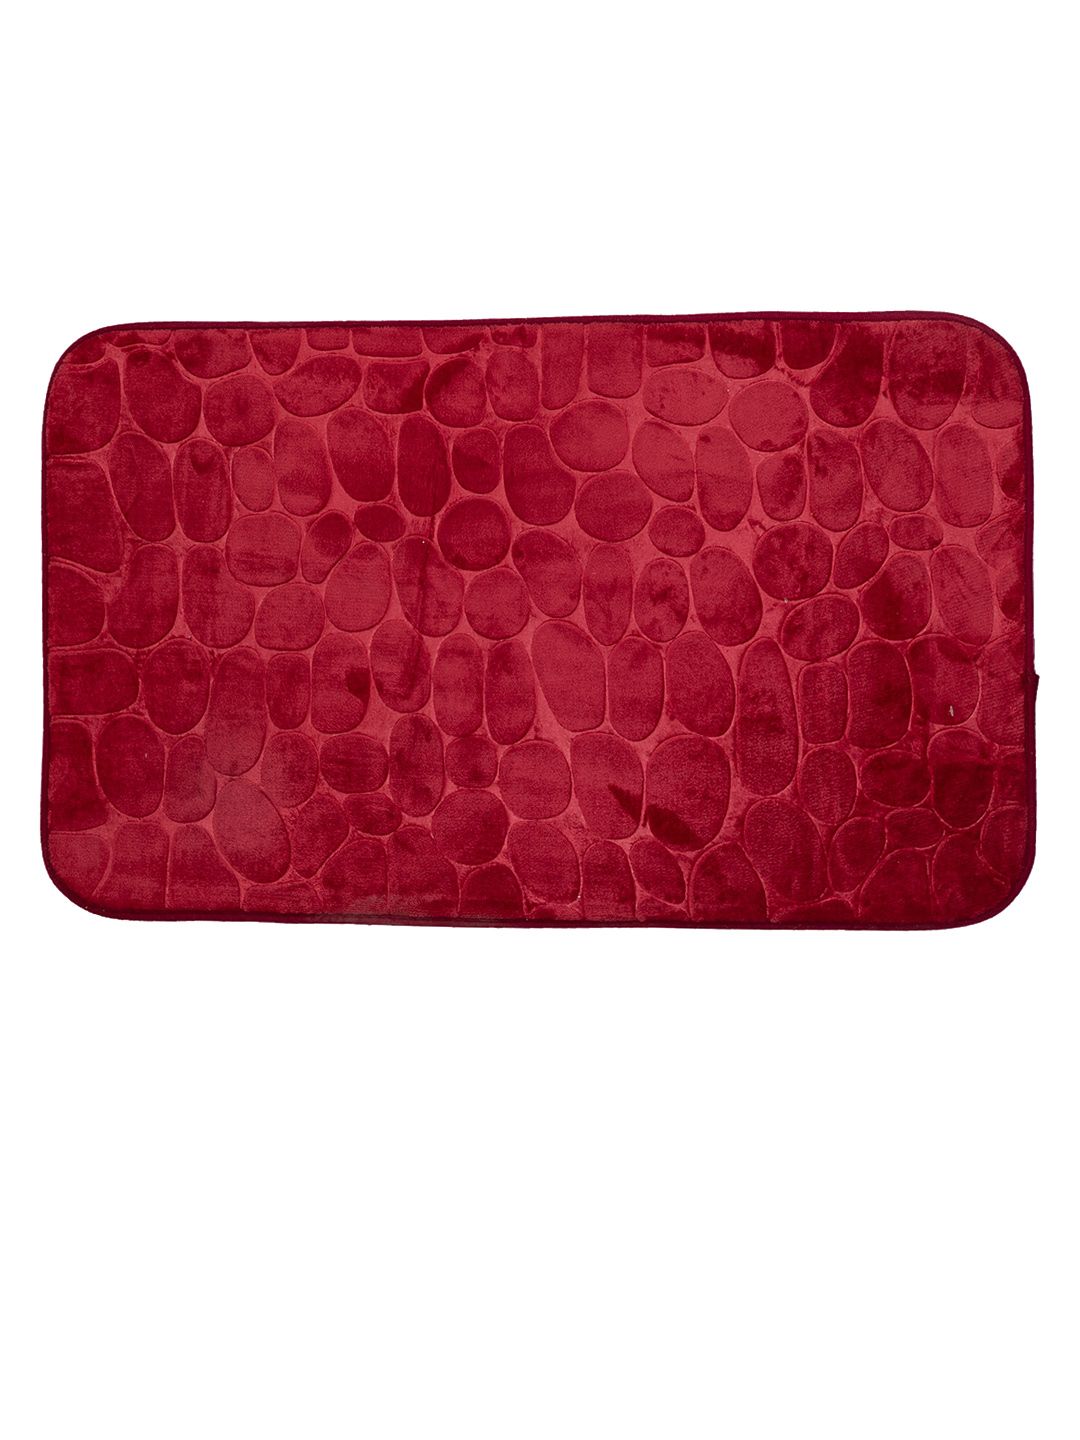 MARKET99 Red Self-Design Rectangular Bath Rugs Price in India